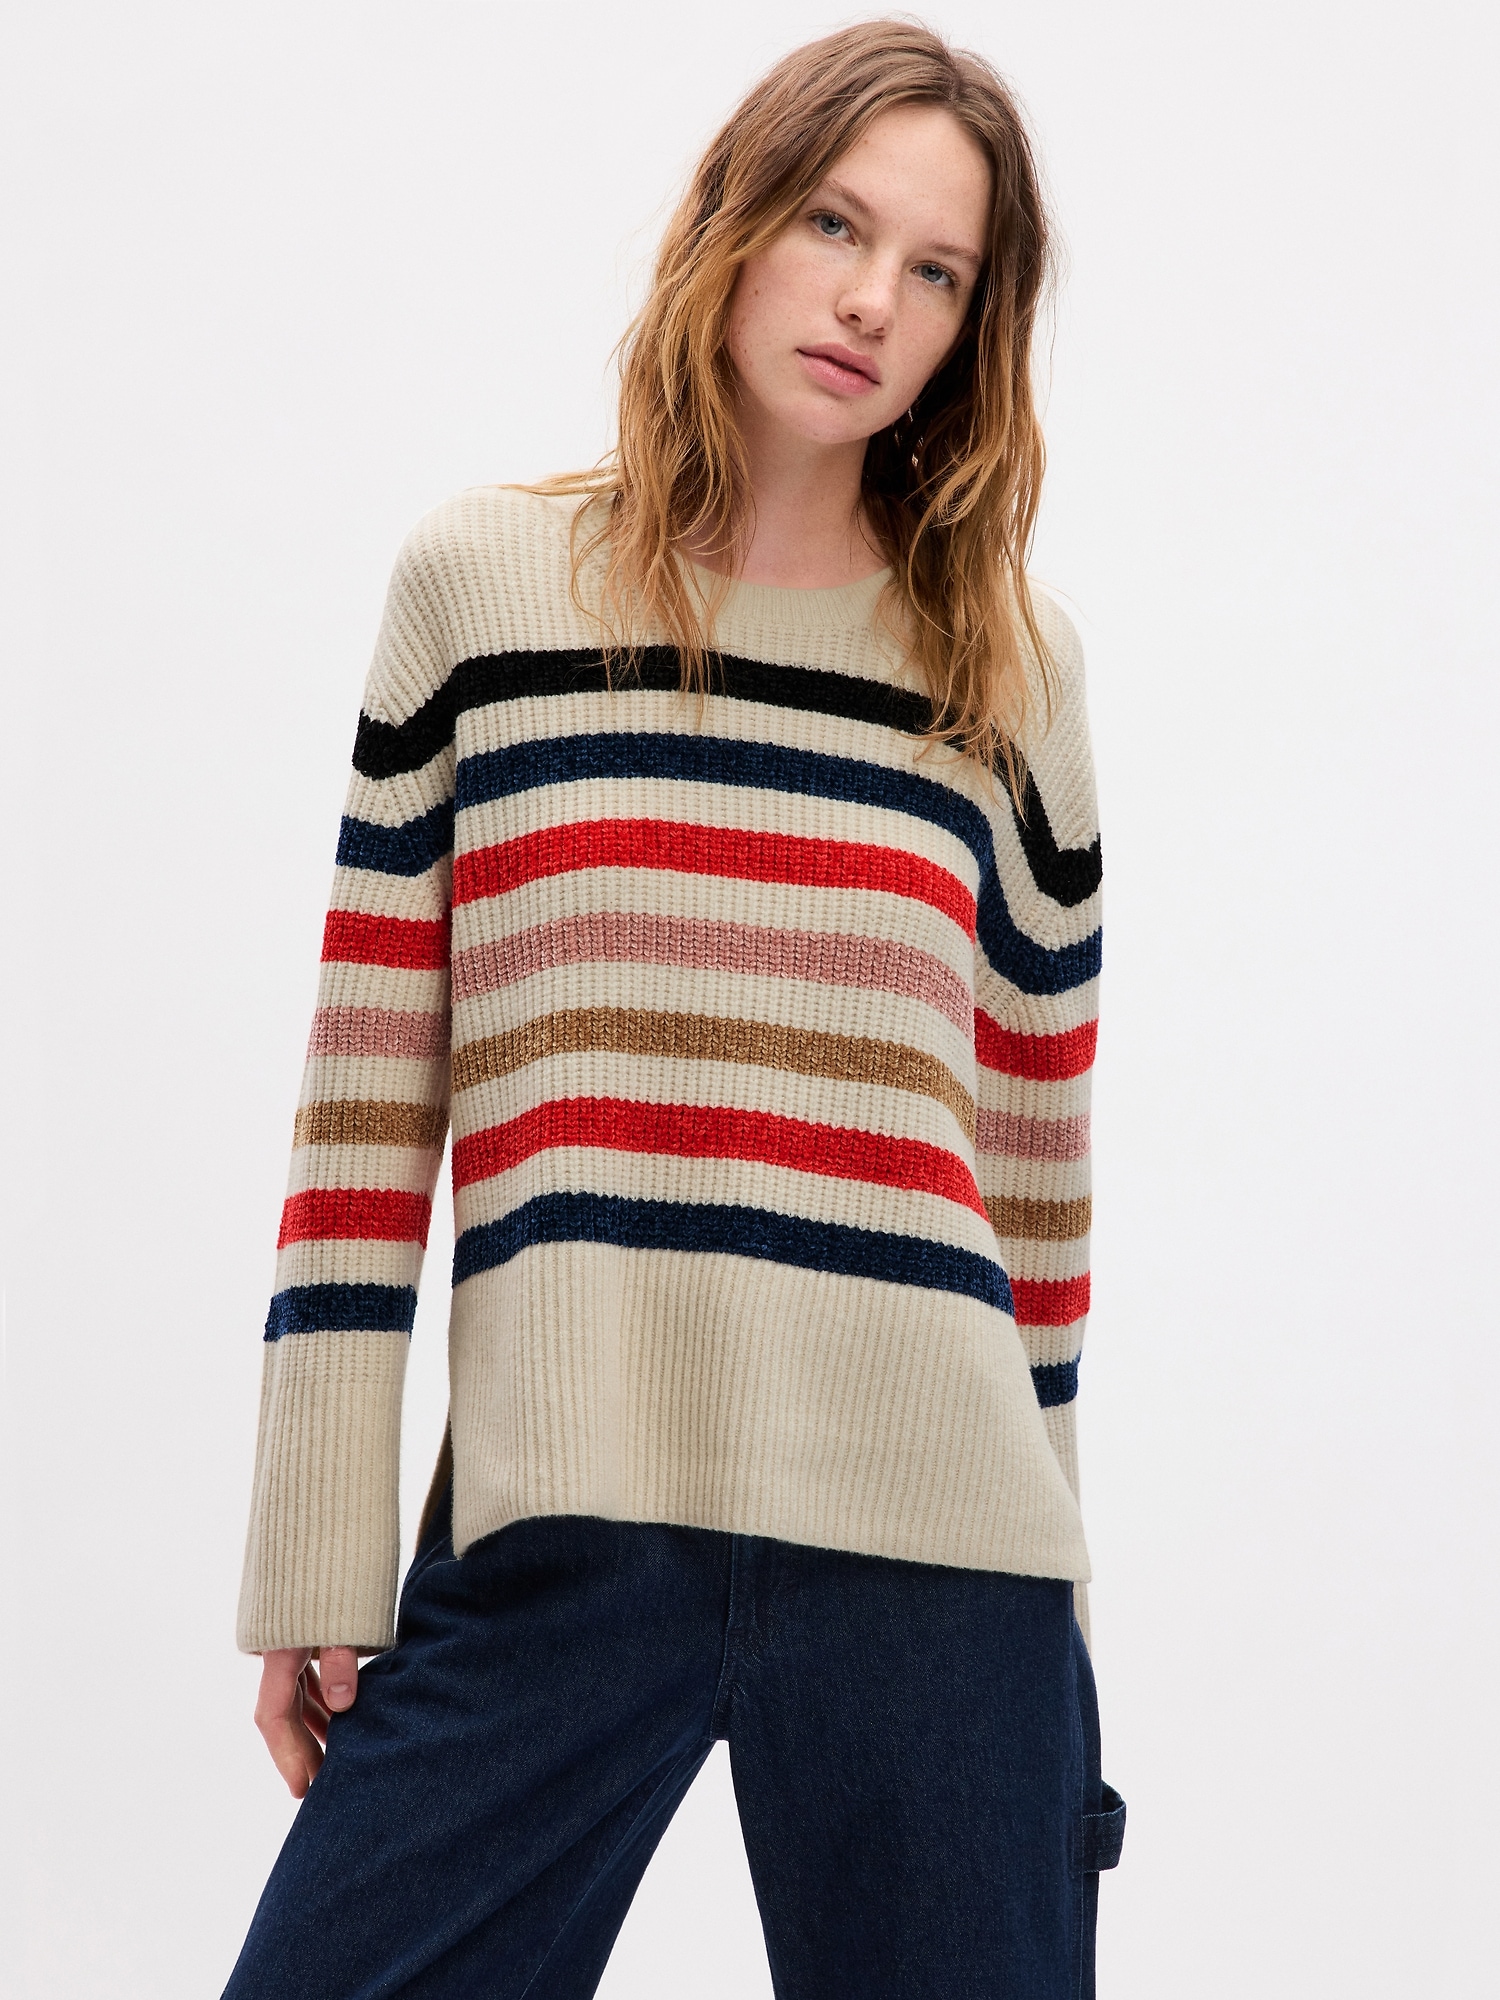 Gap 24/7 Split-Hem CashSoft Stripe Sweater